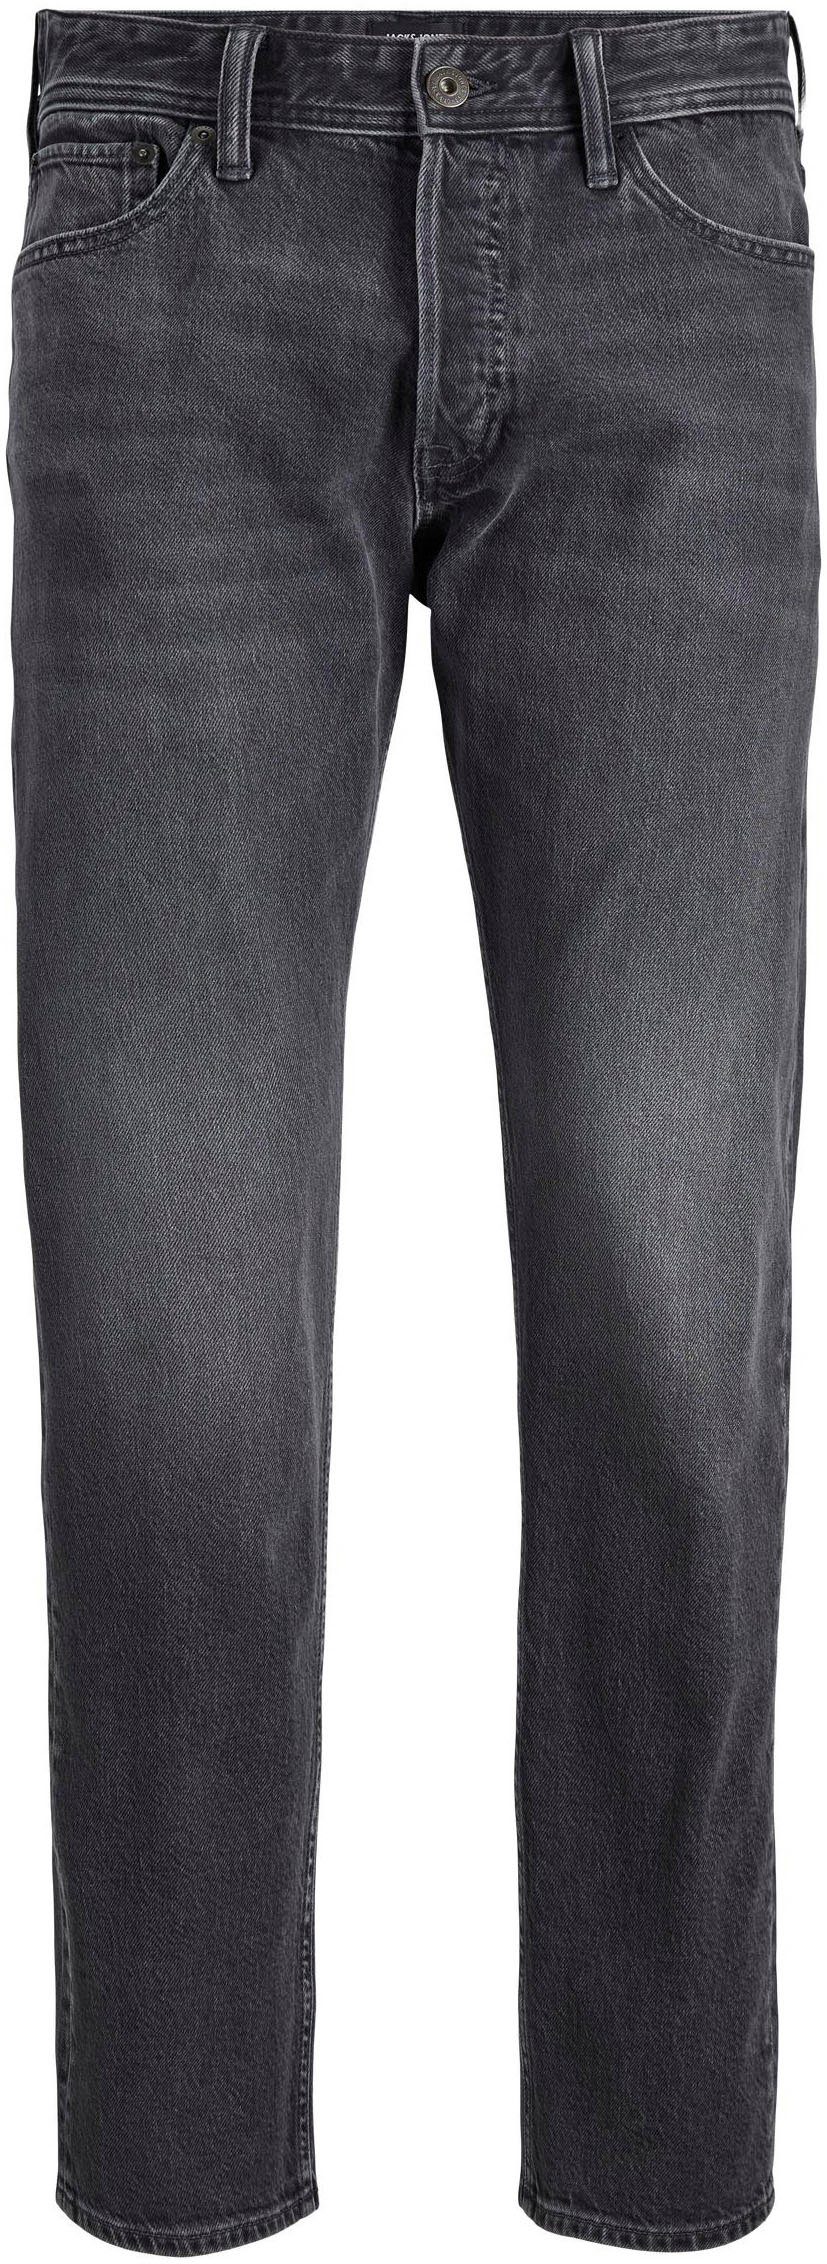 Jones Jack 230 JJORIGINAL black JJIMIKE Comfort-fit-Jeans & SBD BF denim